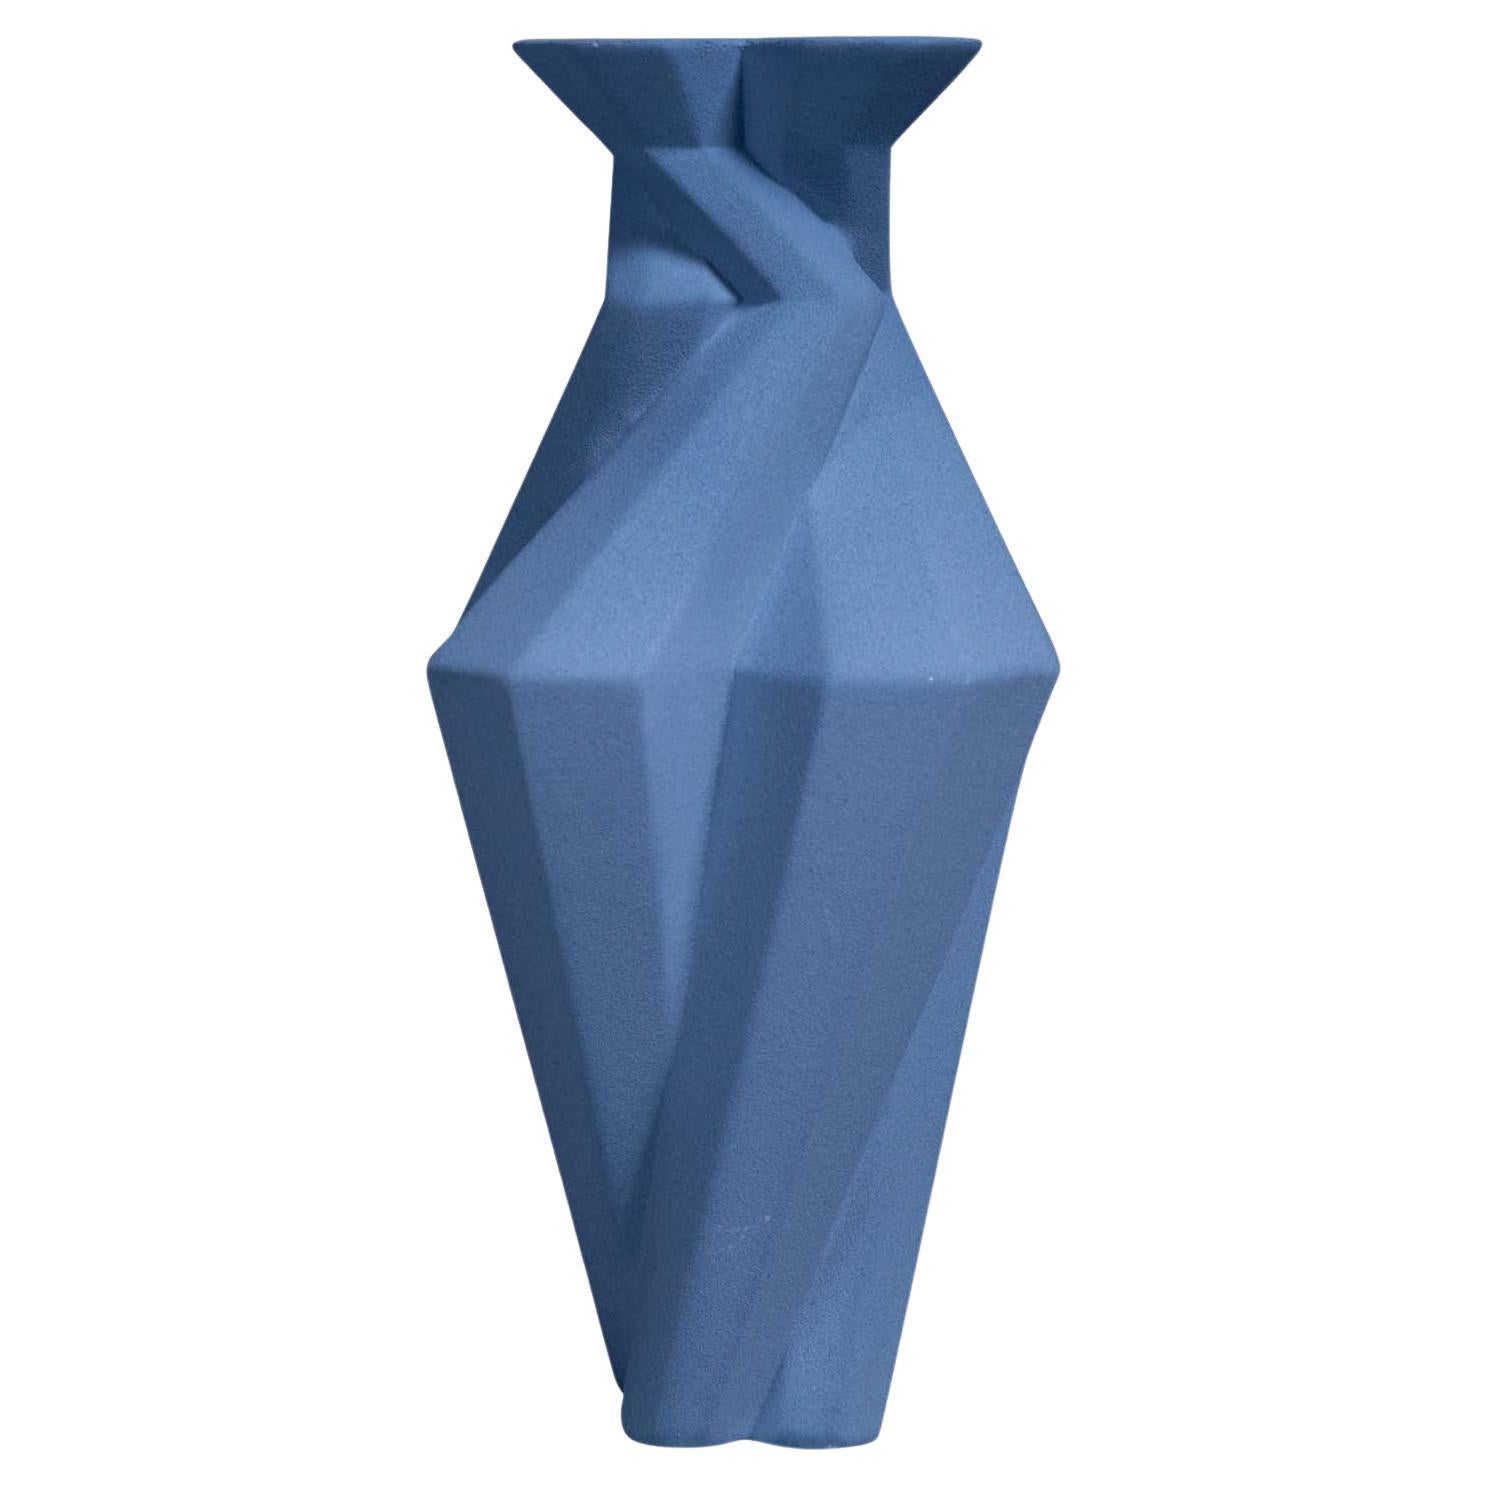 Fortress Spire Vase Blue Ceramic Geometric Contemporary by Lara Bohinc, in Stock